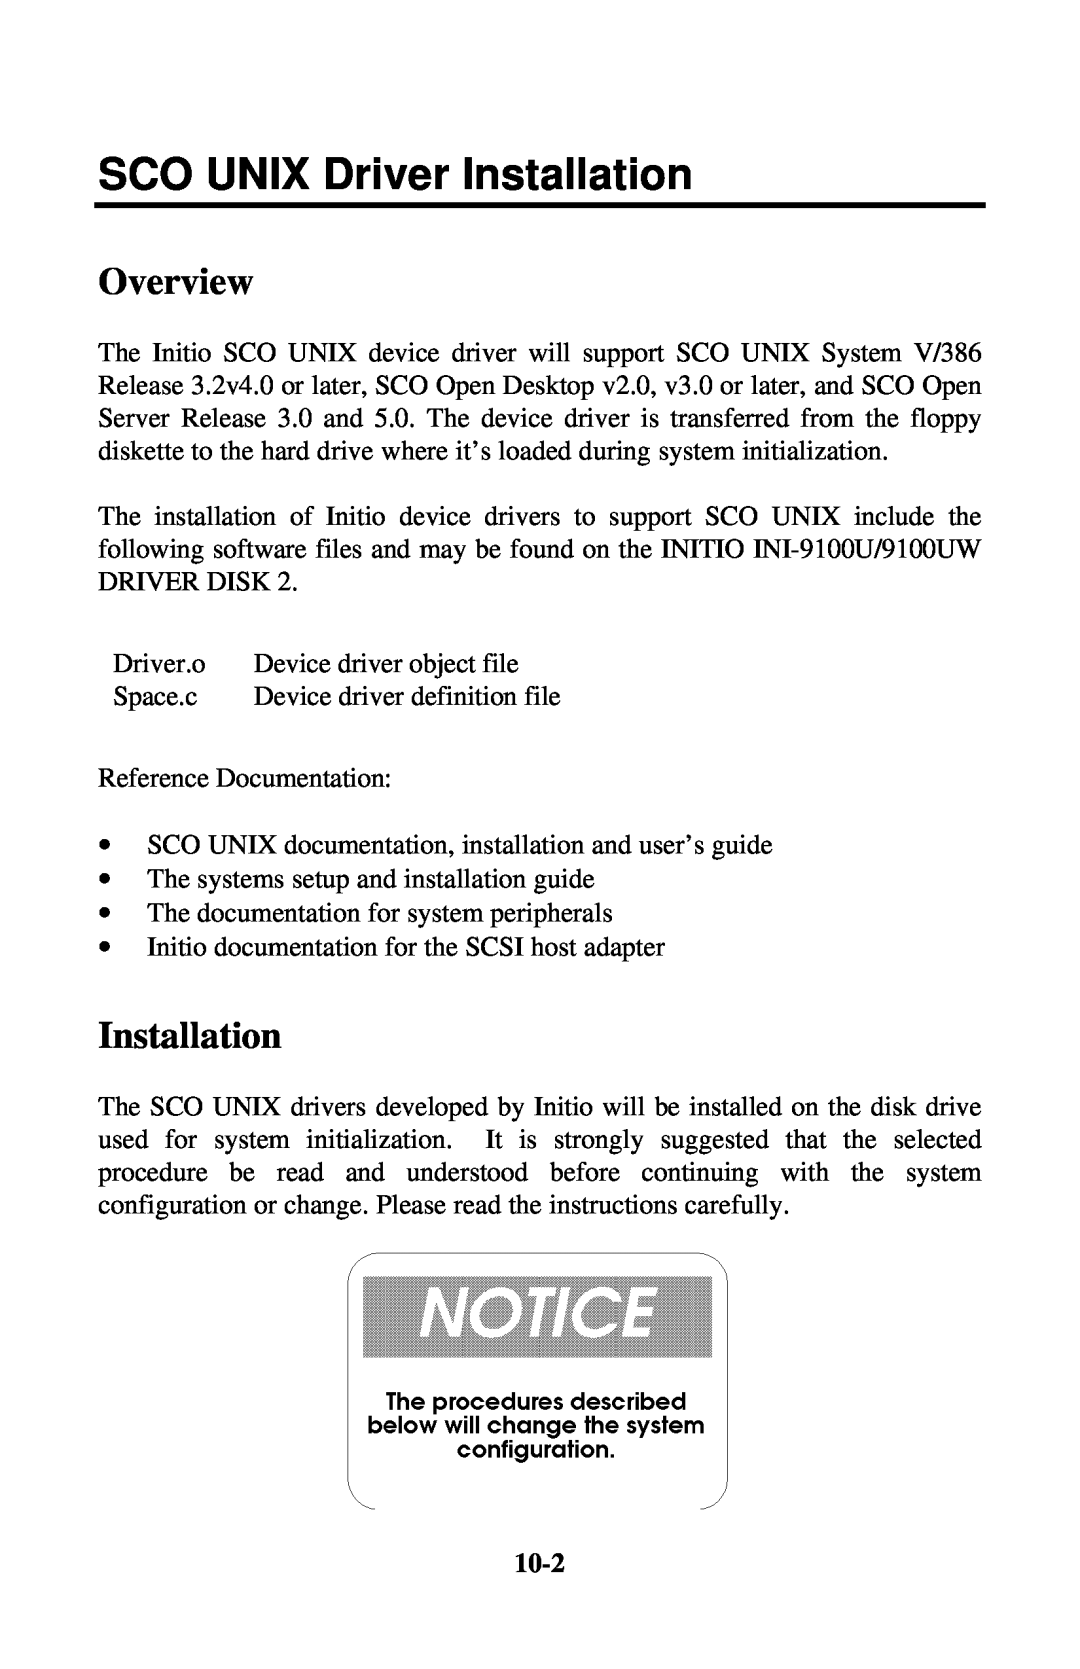 Initio INI-9100UW user manual SCO UNIX Driver Installation, 10-2, Overview 